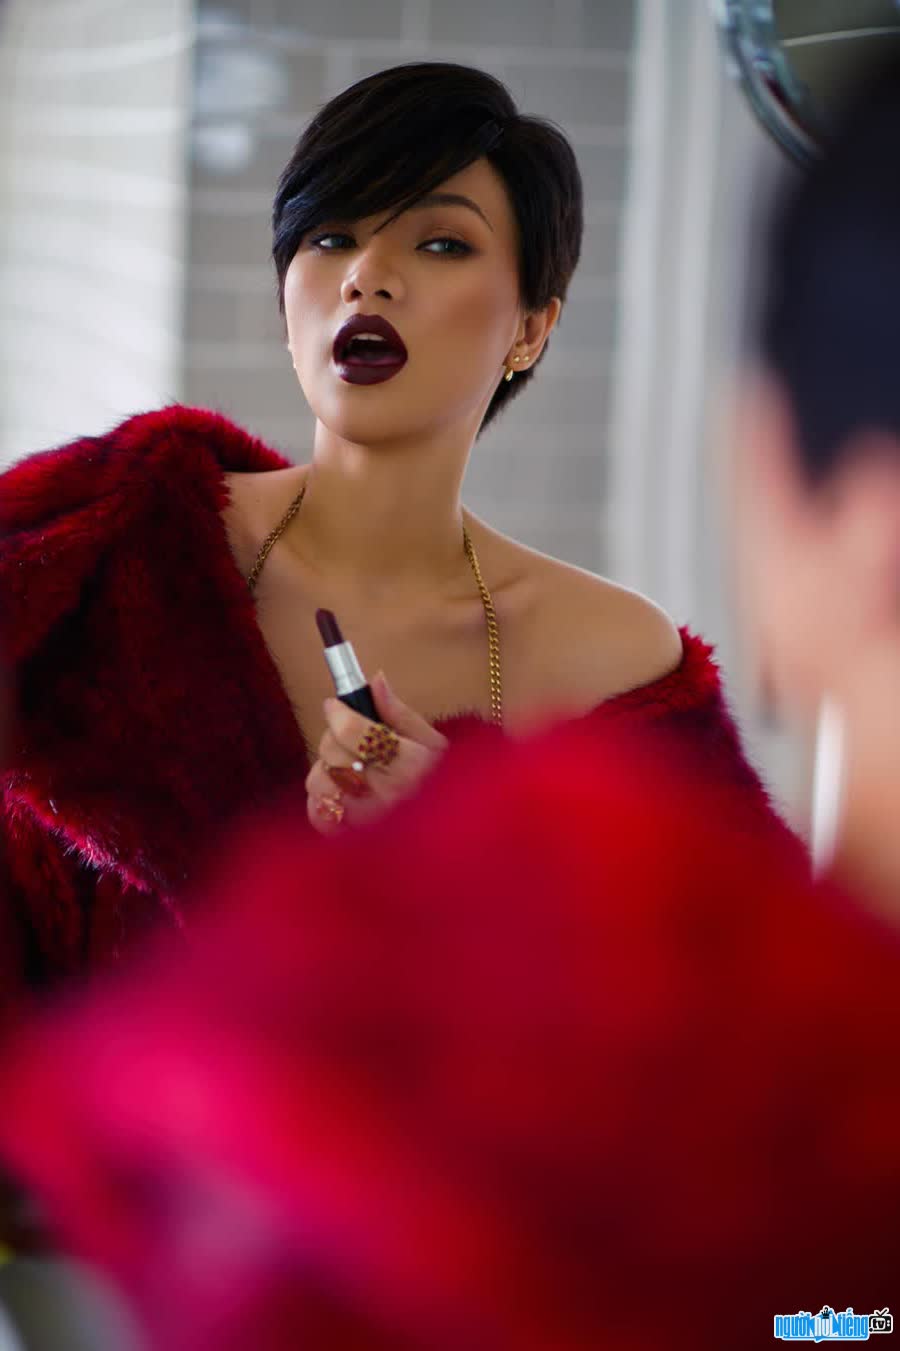 Singer Bom B idol singer Rihanna